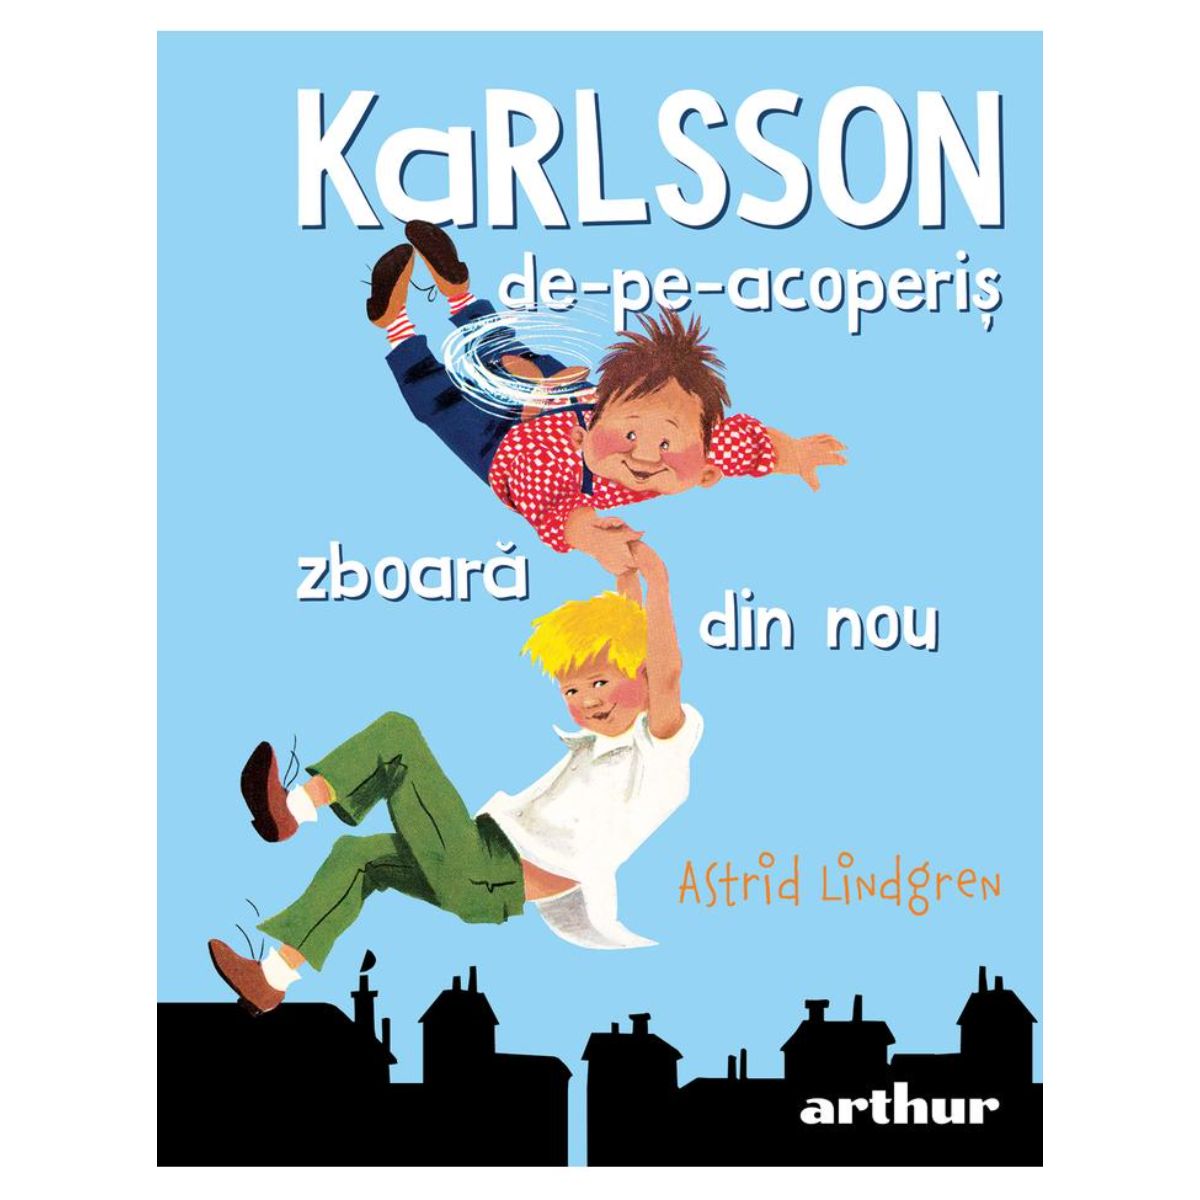 Karlsson de pe acoperis zboara din nou, Astrid Lindgren, Editura Art